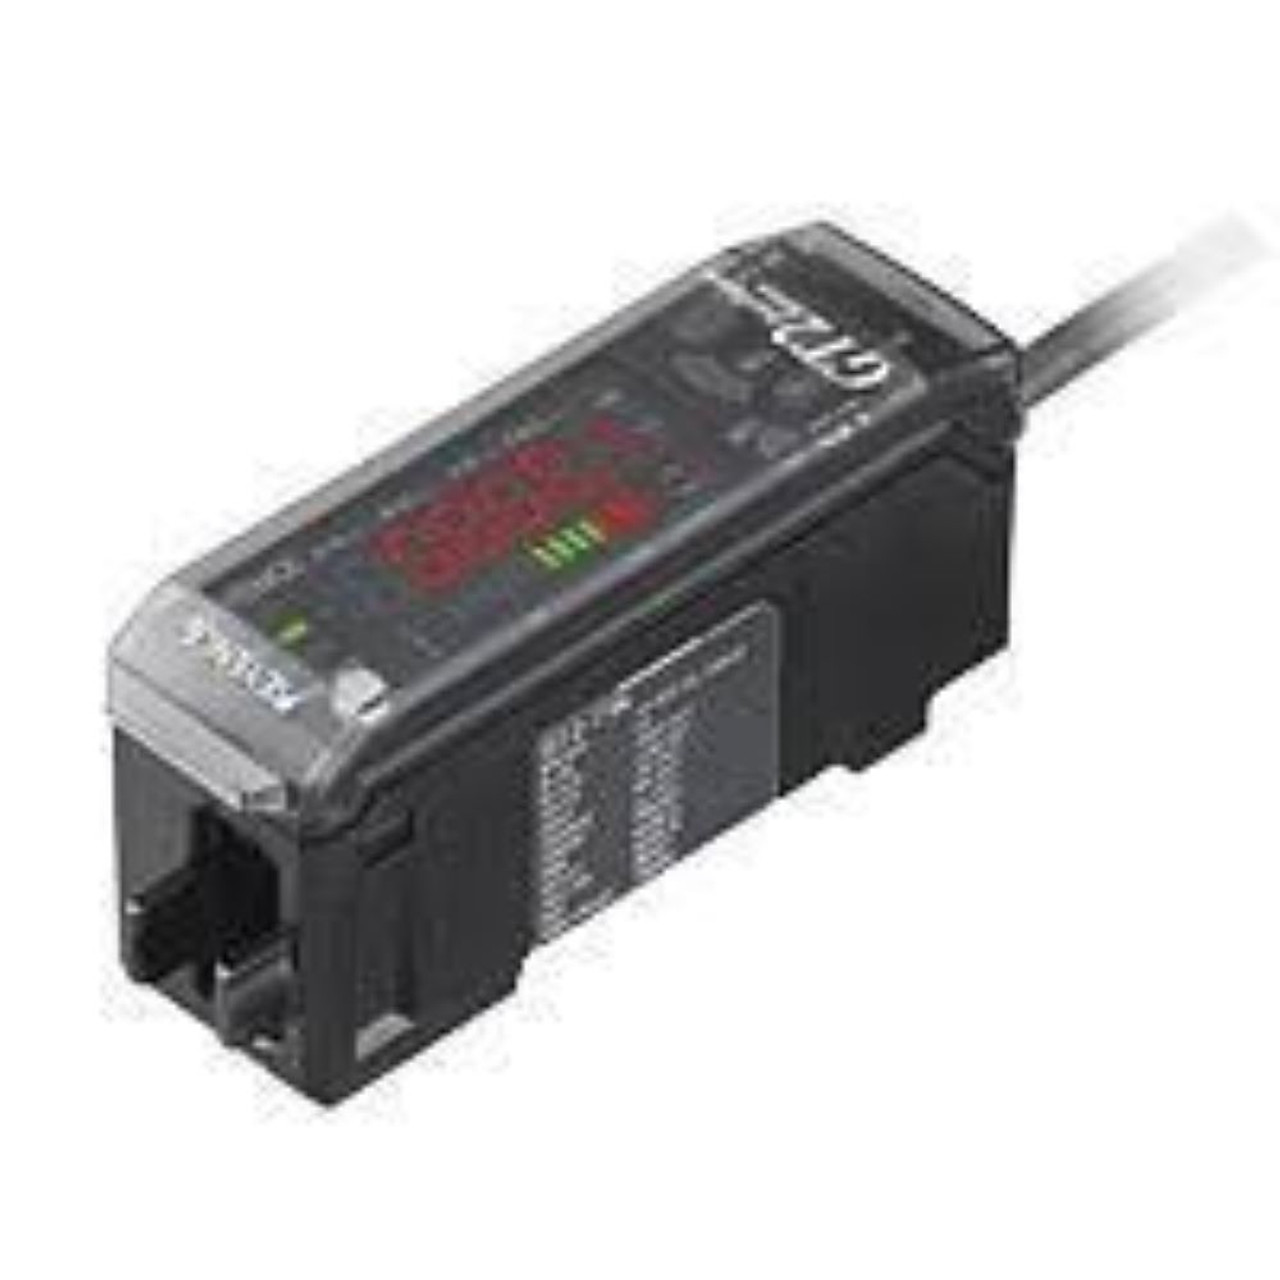 Keyence GT2-71P High-Accuracy Digital Contact Sensor, Amplifier Unit [New]